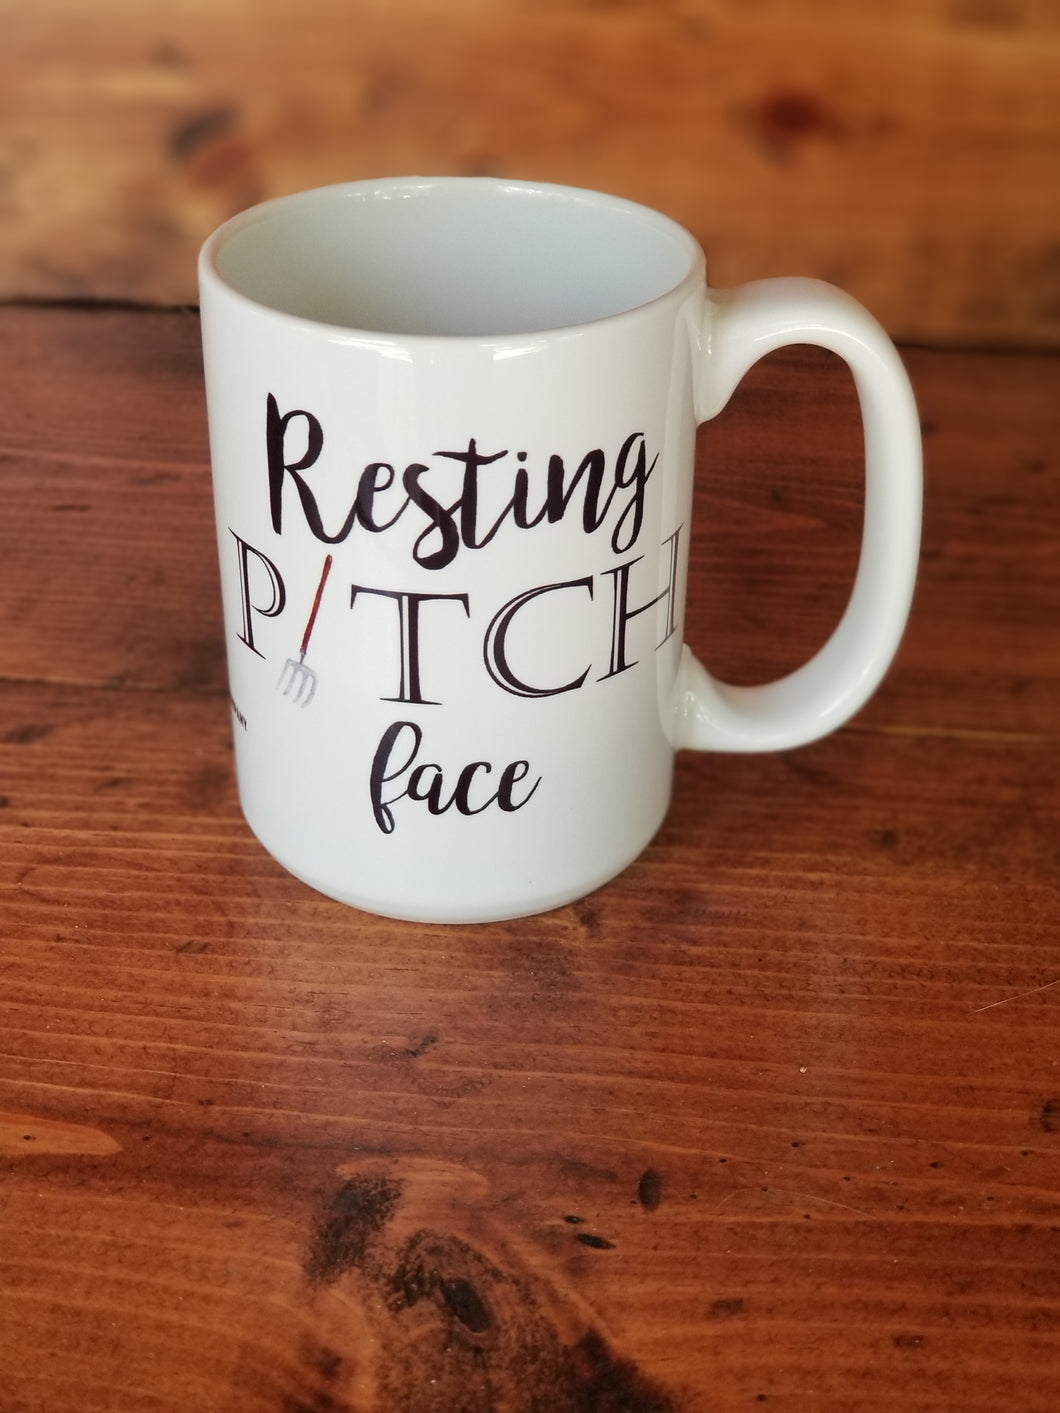 Resting Pitch Face Mug